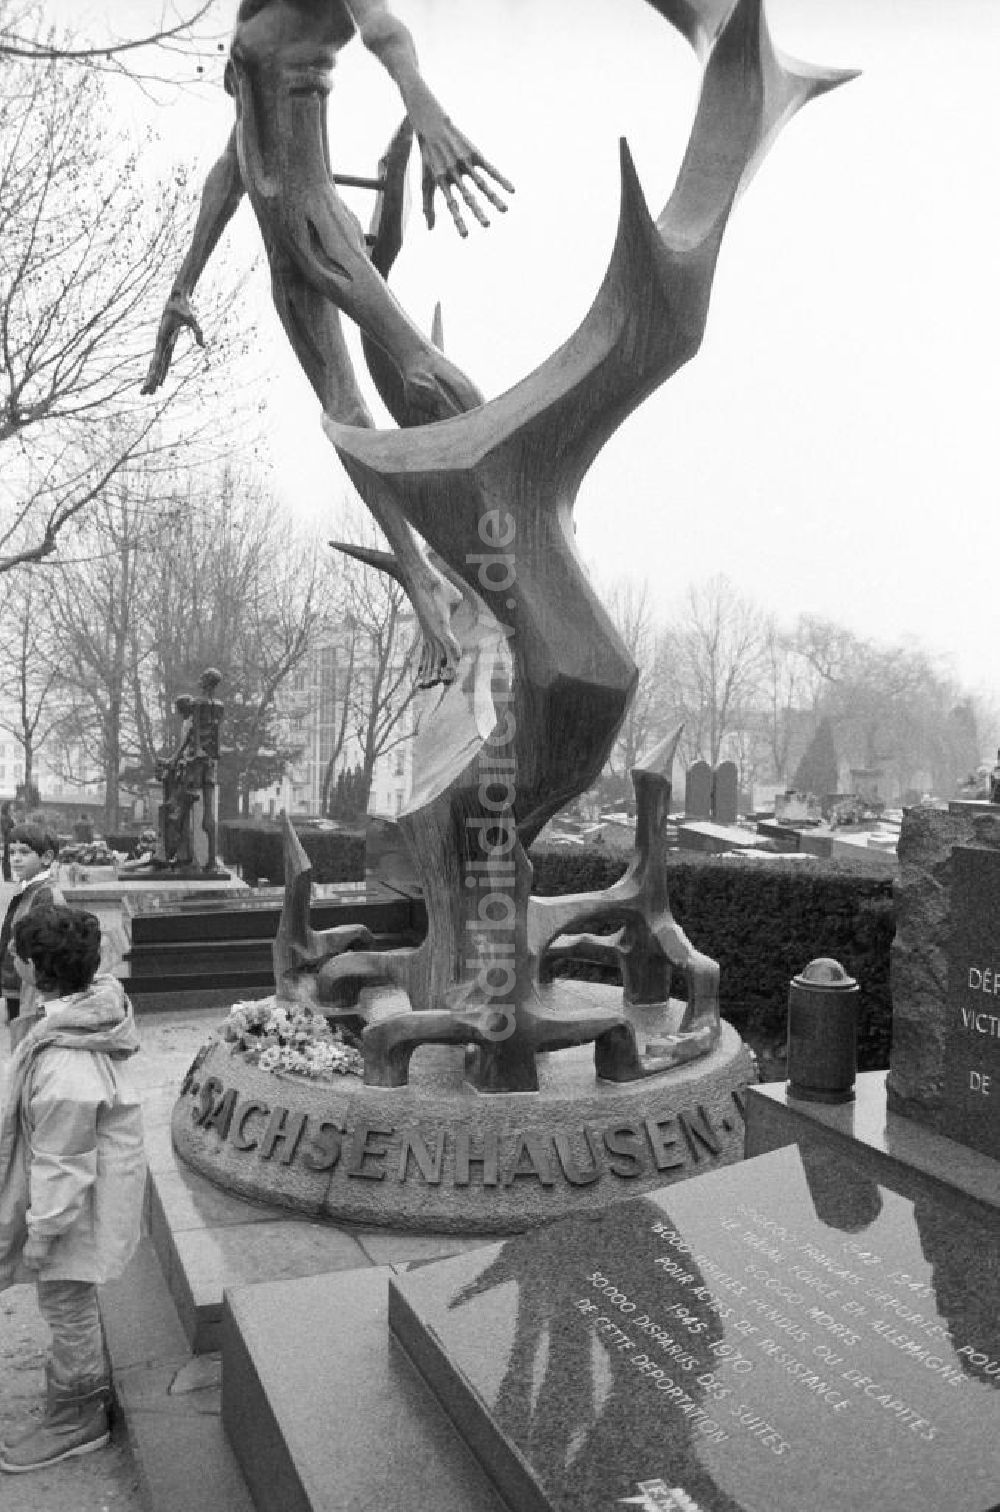 Paris: Denkmal Oranienburg-Sachsenhausen auf dem Friedhof Pere Lachaise in Frankreich-Paris